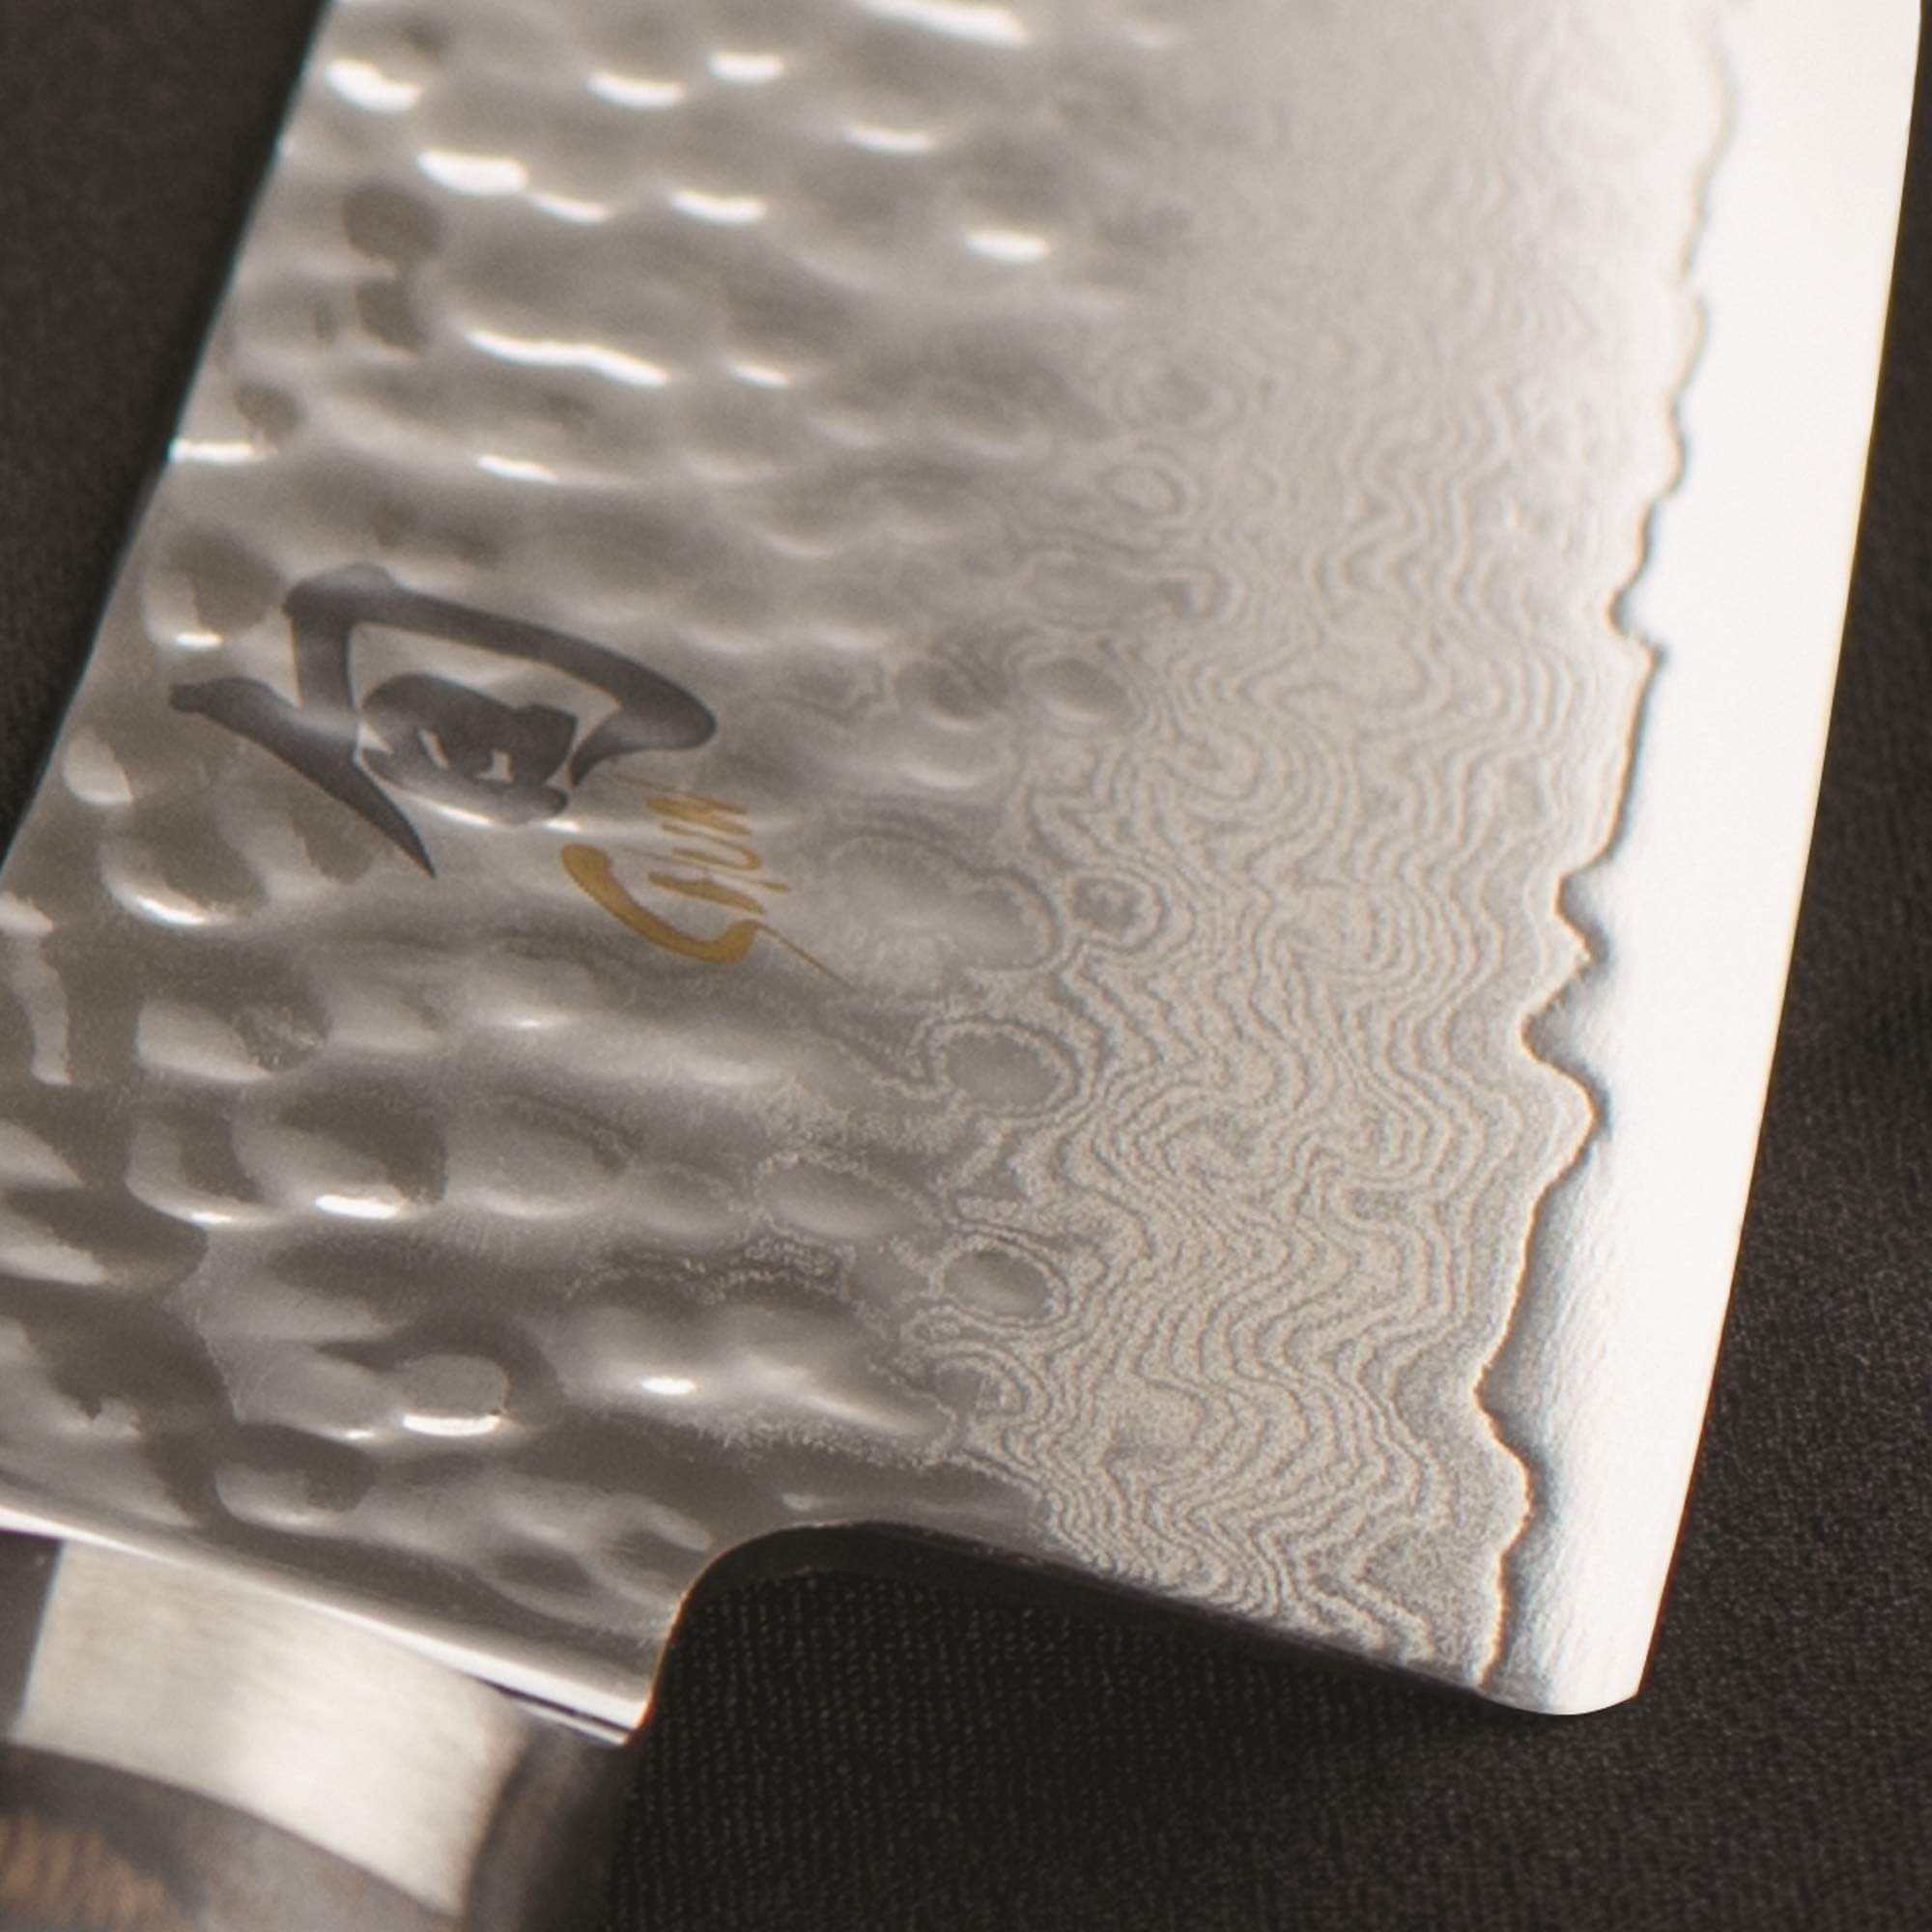 best japanese knives, Shun Cutlery Premier 8" Chef's Knife, best knives